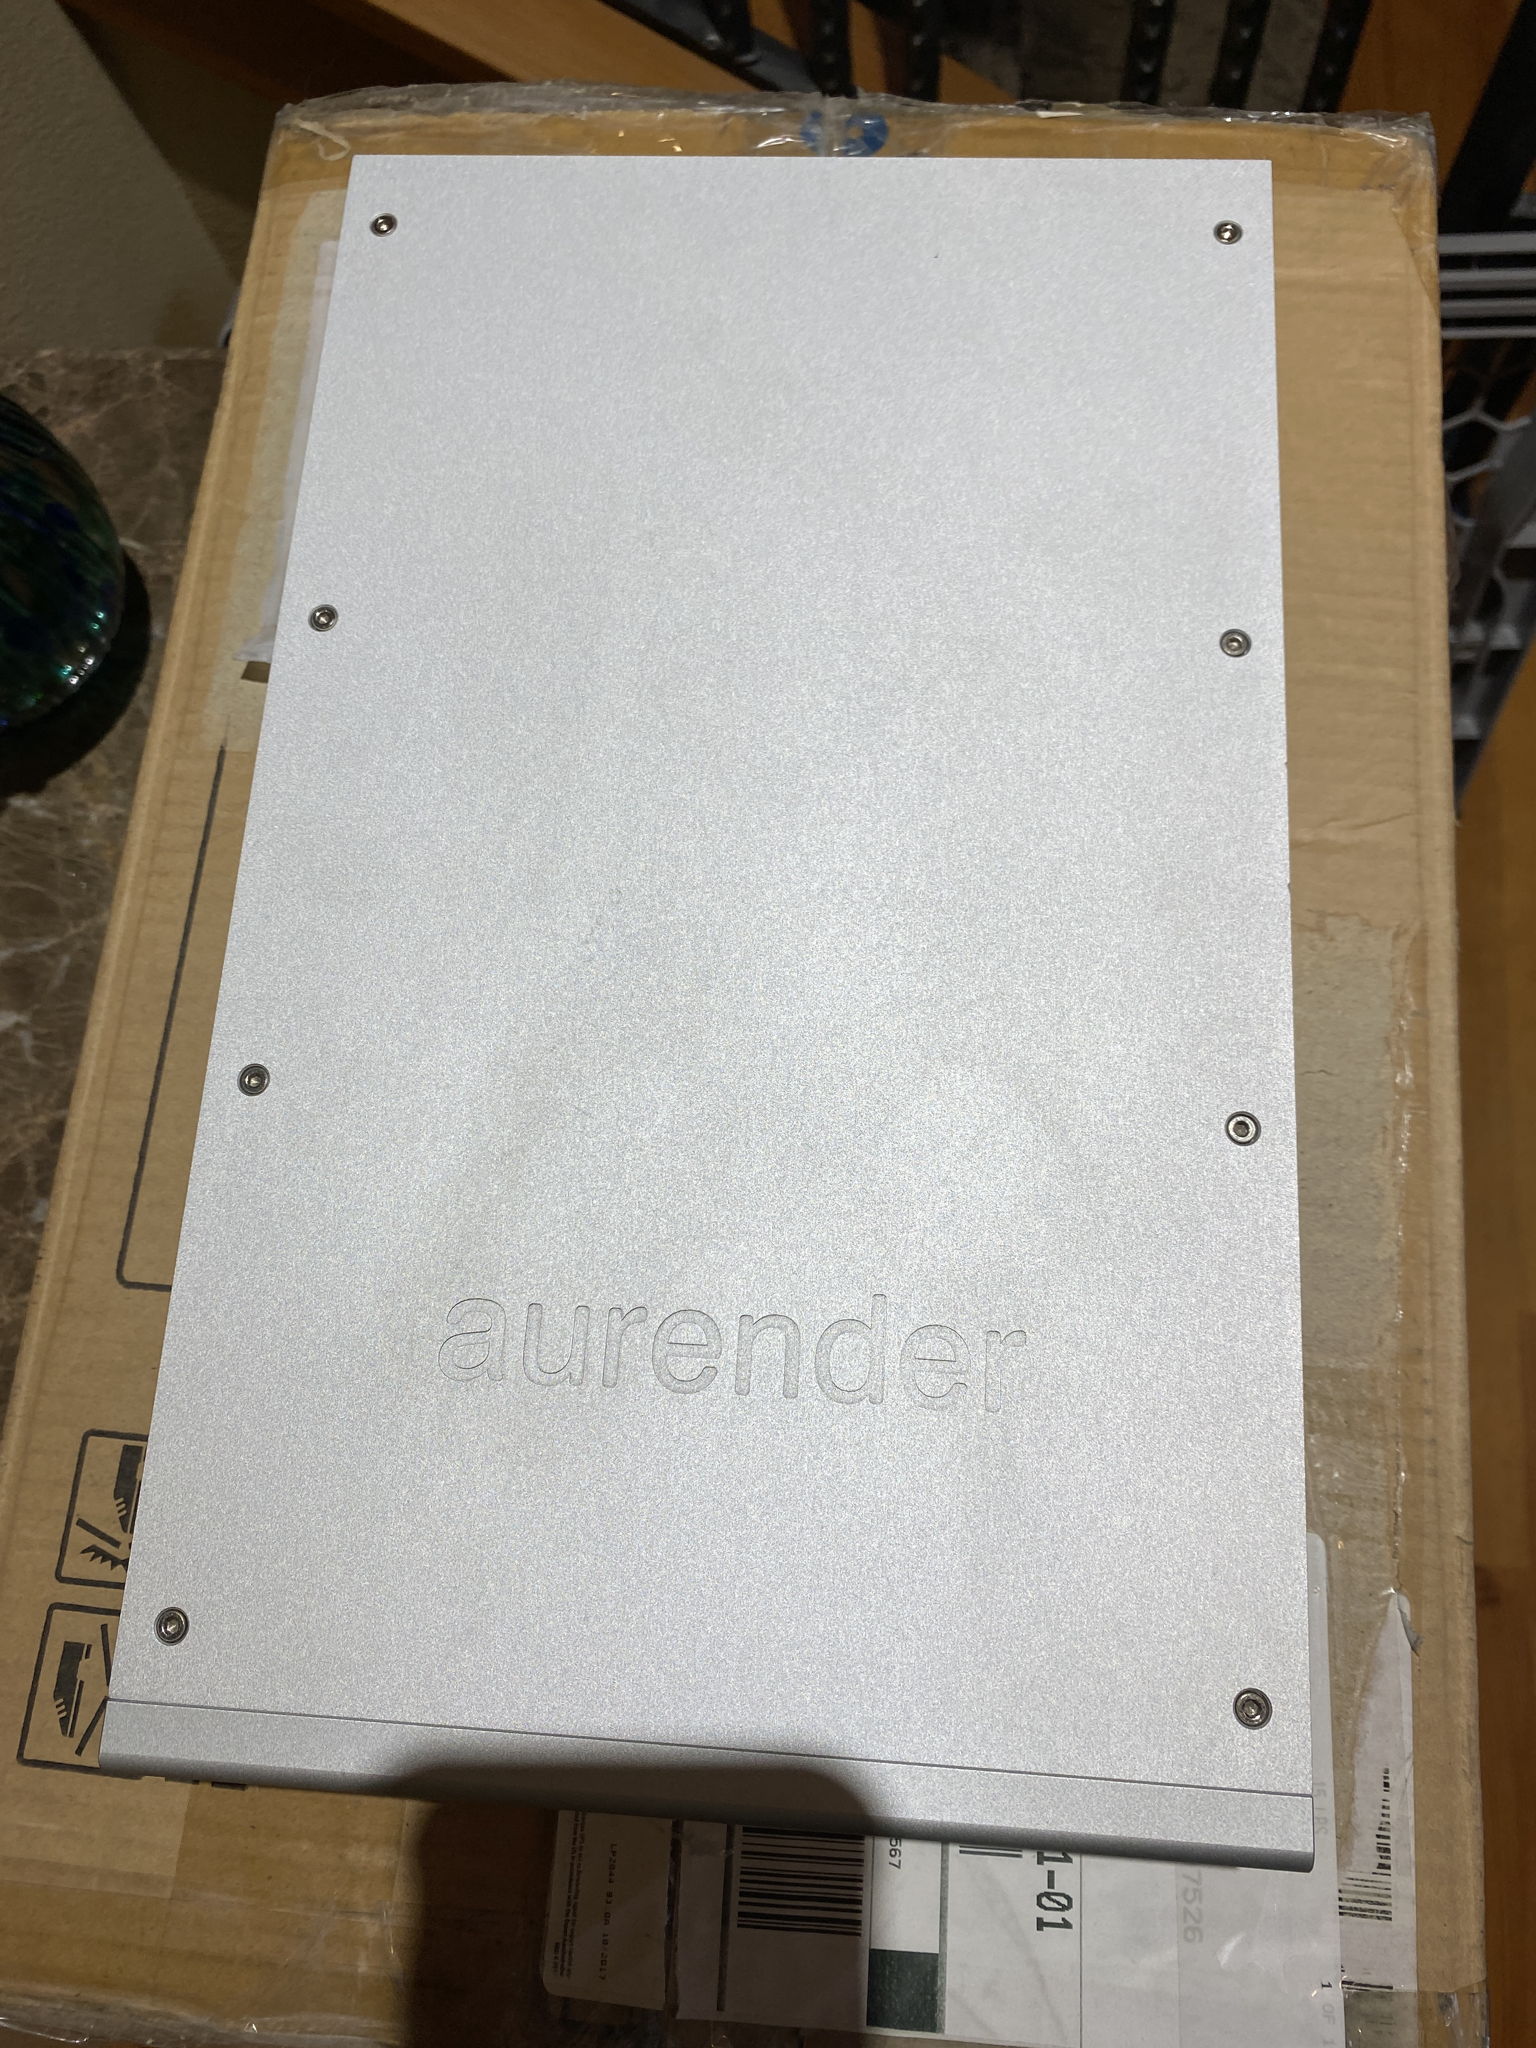 Aurender N100H Server Streamer 3